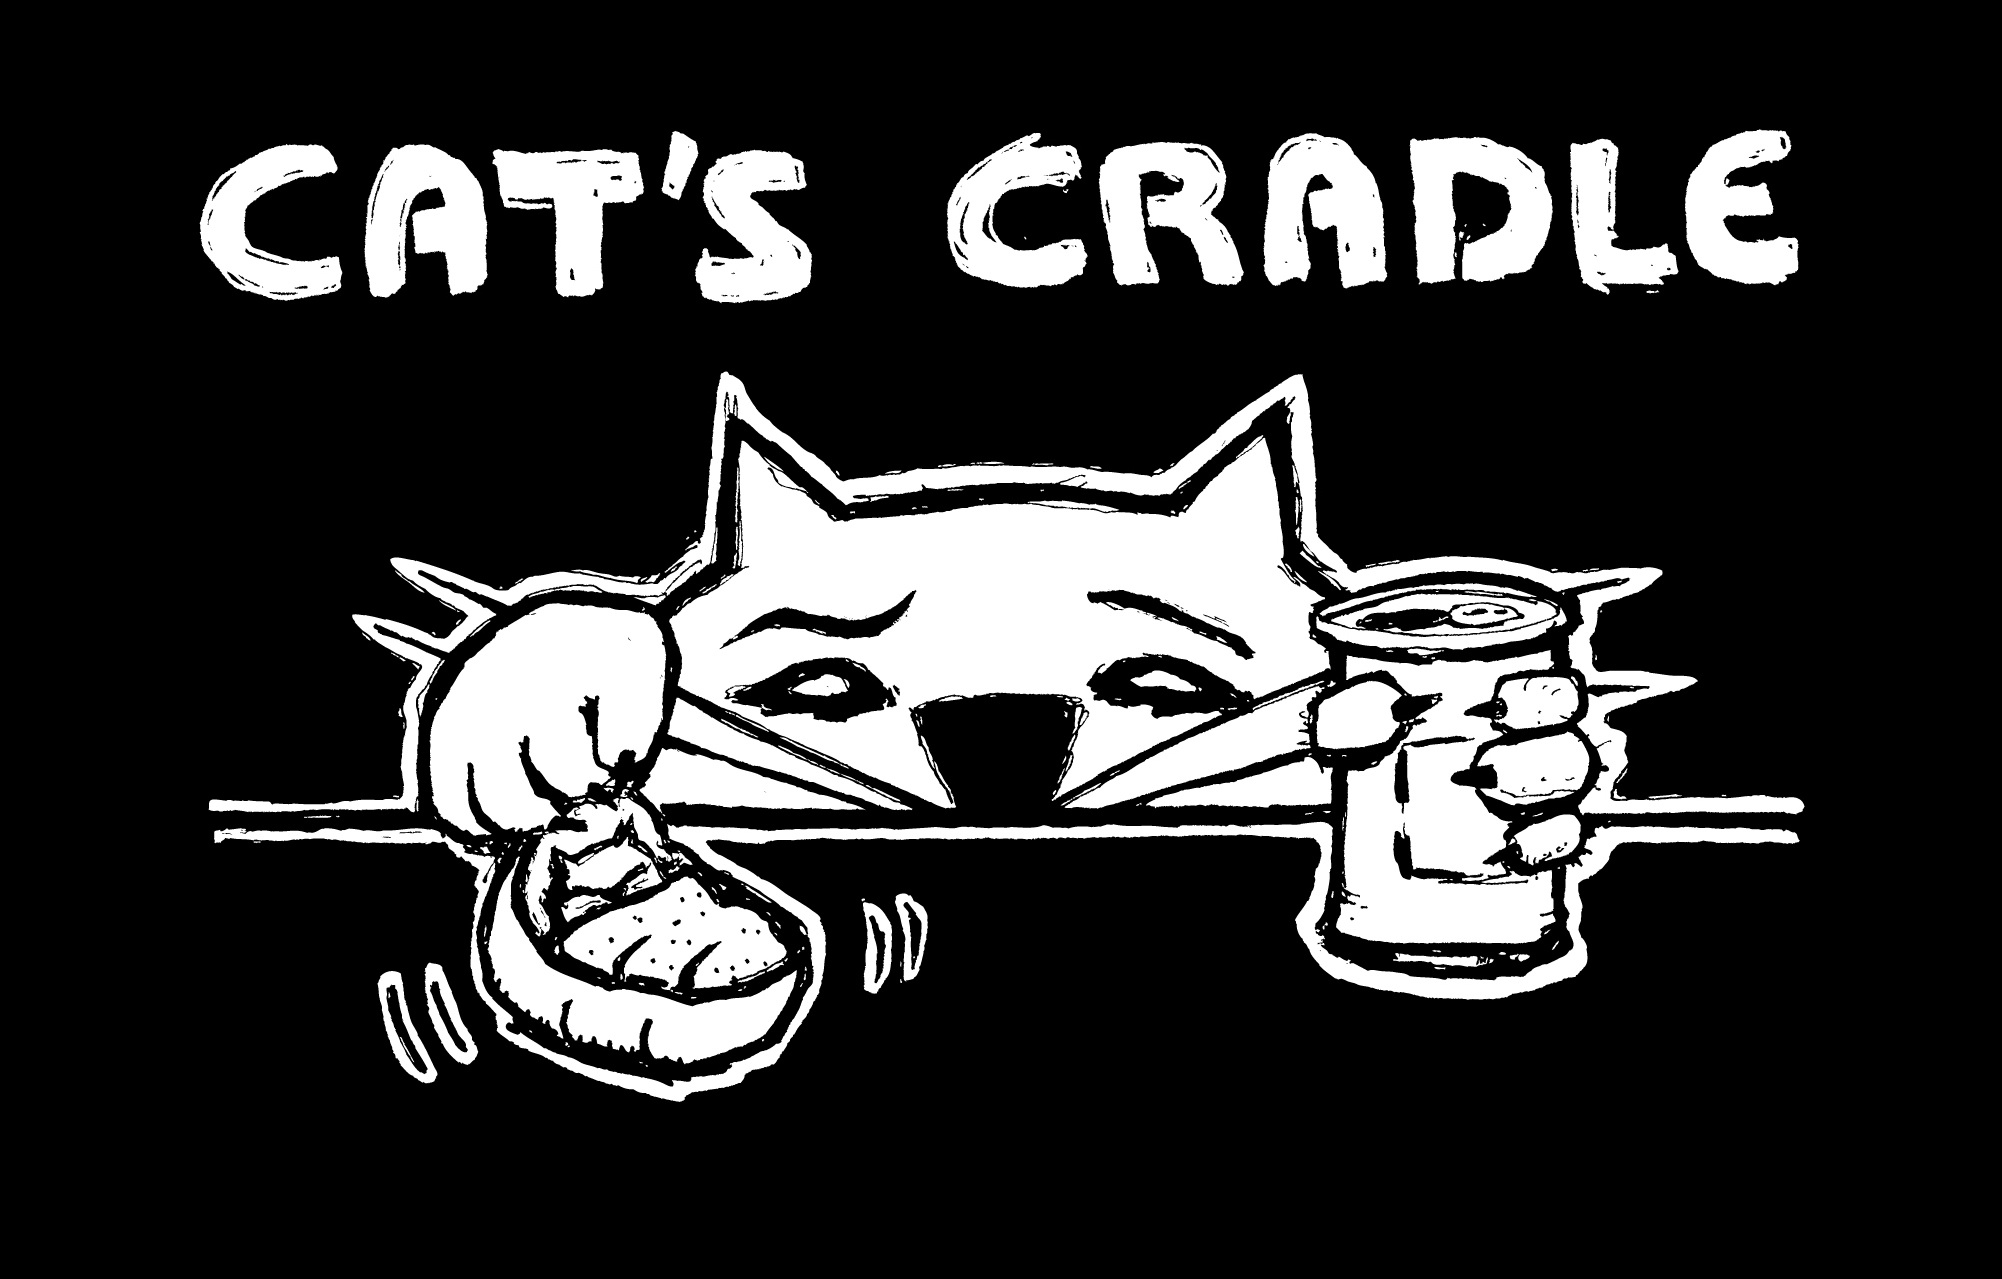 CatsCradle.jpg